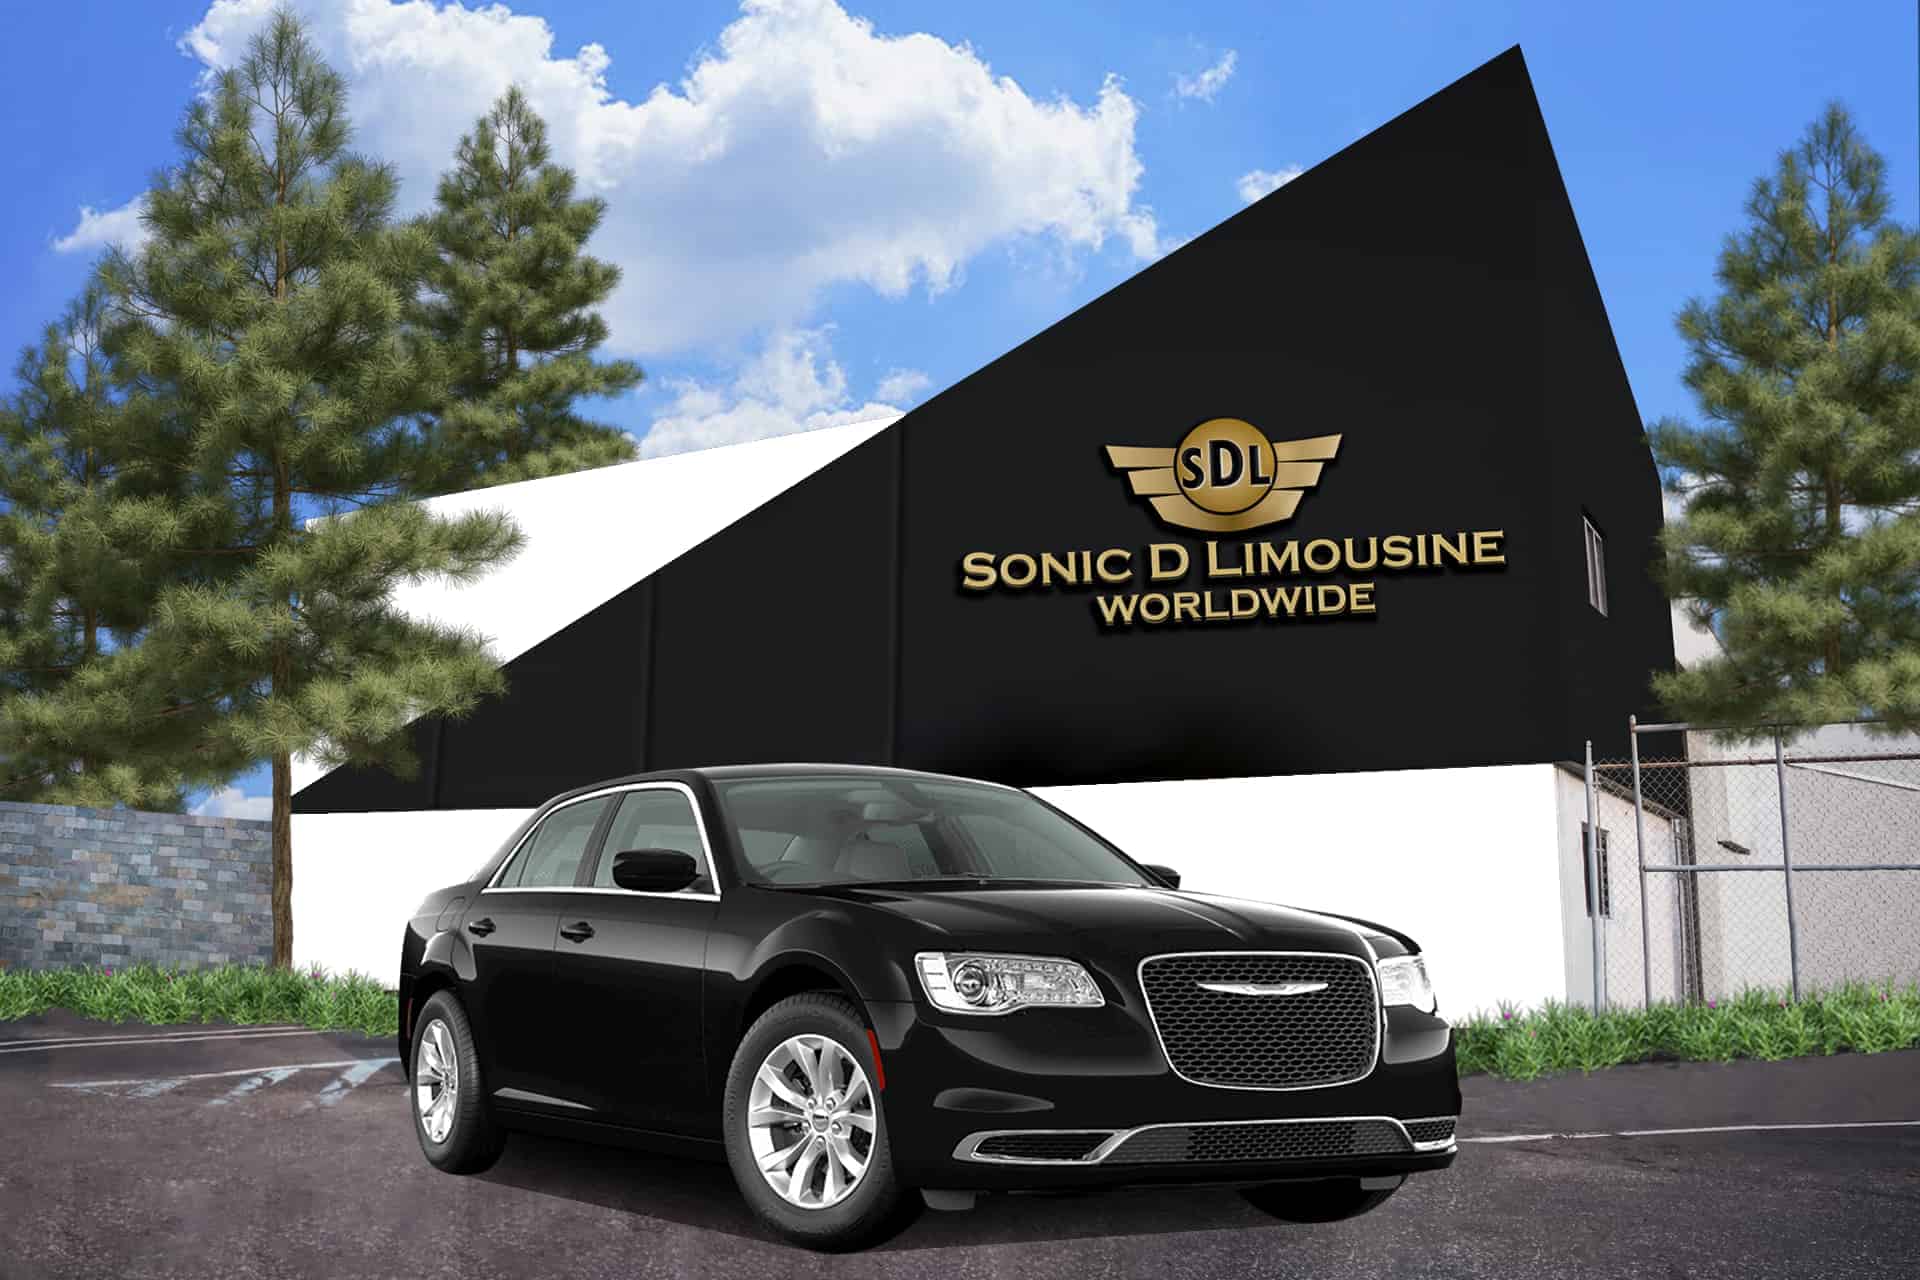 Sonic D Limousine logo in the background of Chrysler 300